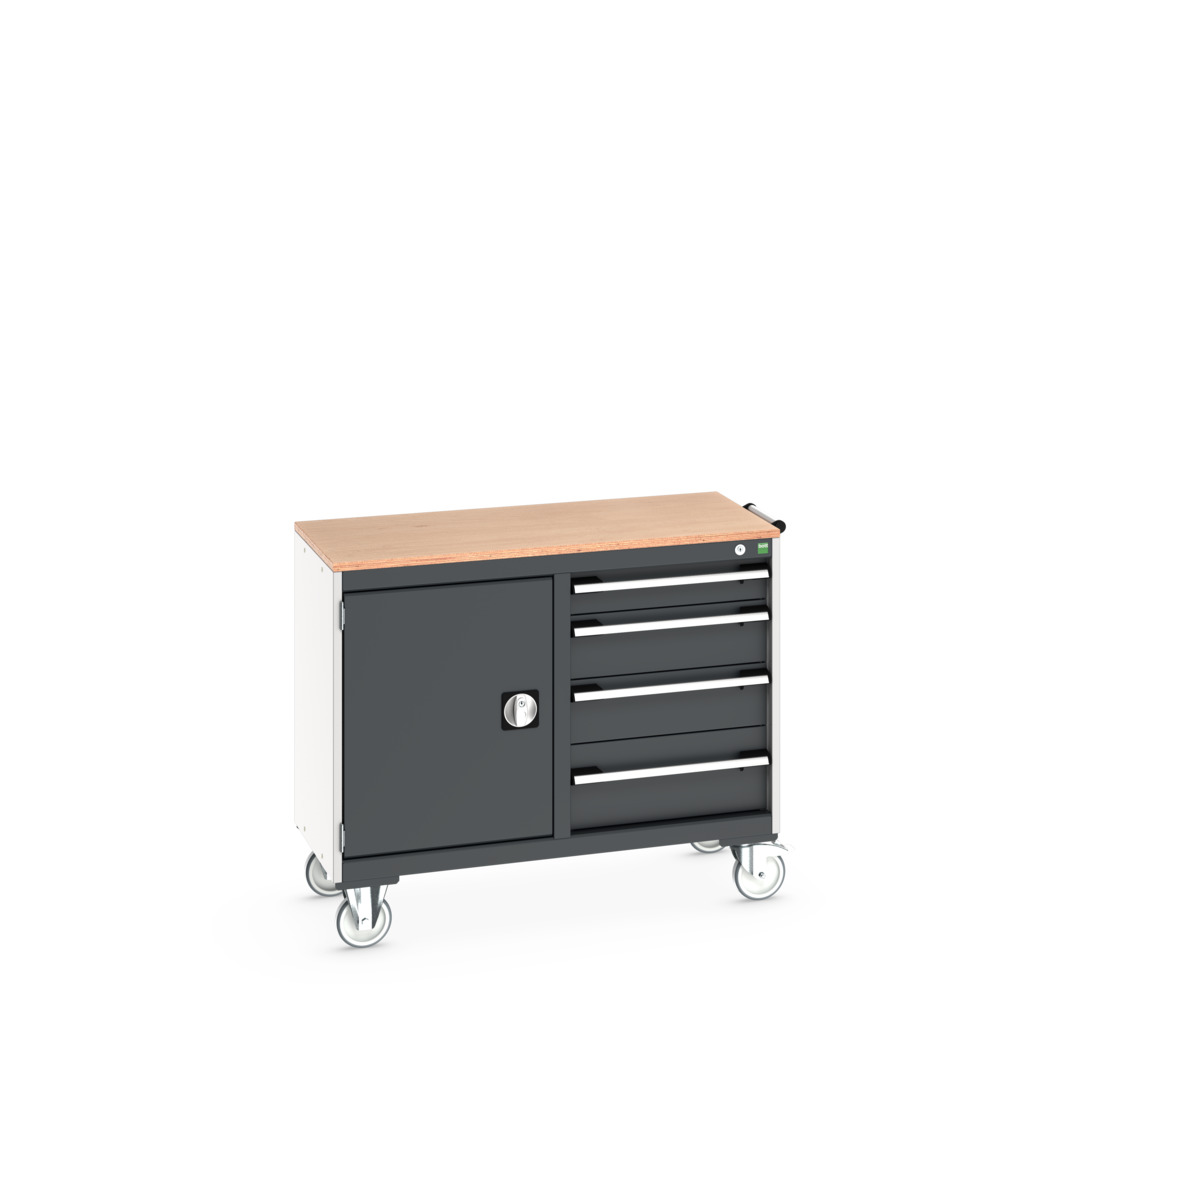 41006004. - cubio mobile cabinet 50/50 (mpx)